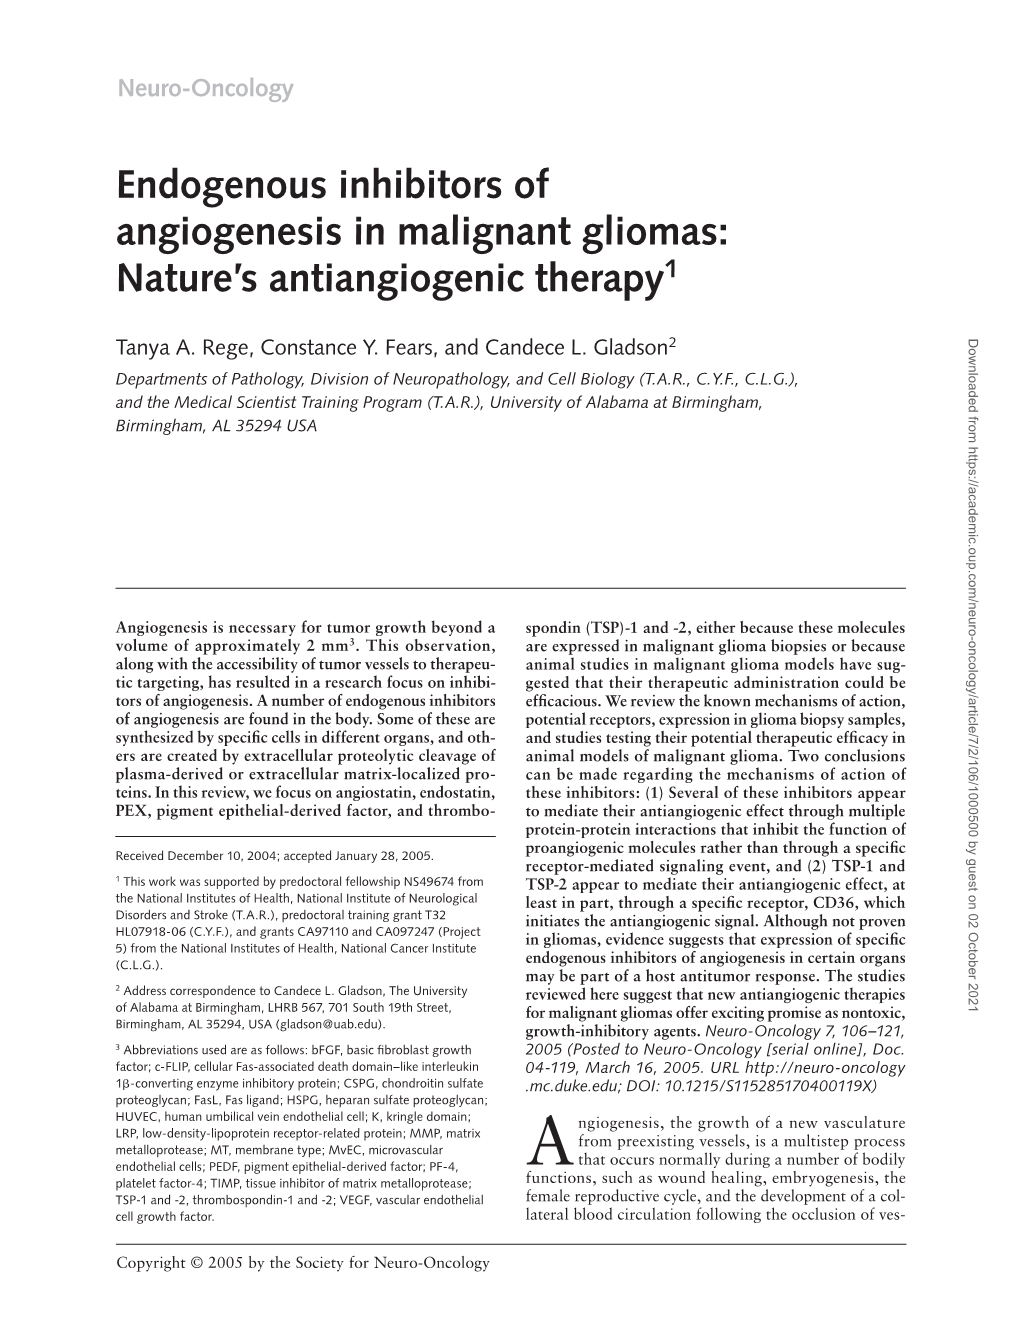 Endogenous Inhibitors of Angiogenesis in Malignant Gliomas: Nature’S Antiangiogenic Therapy1